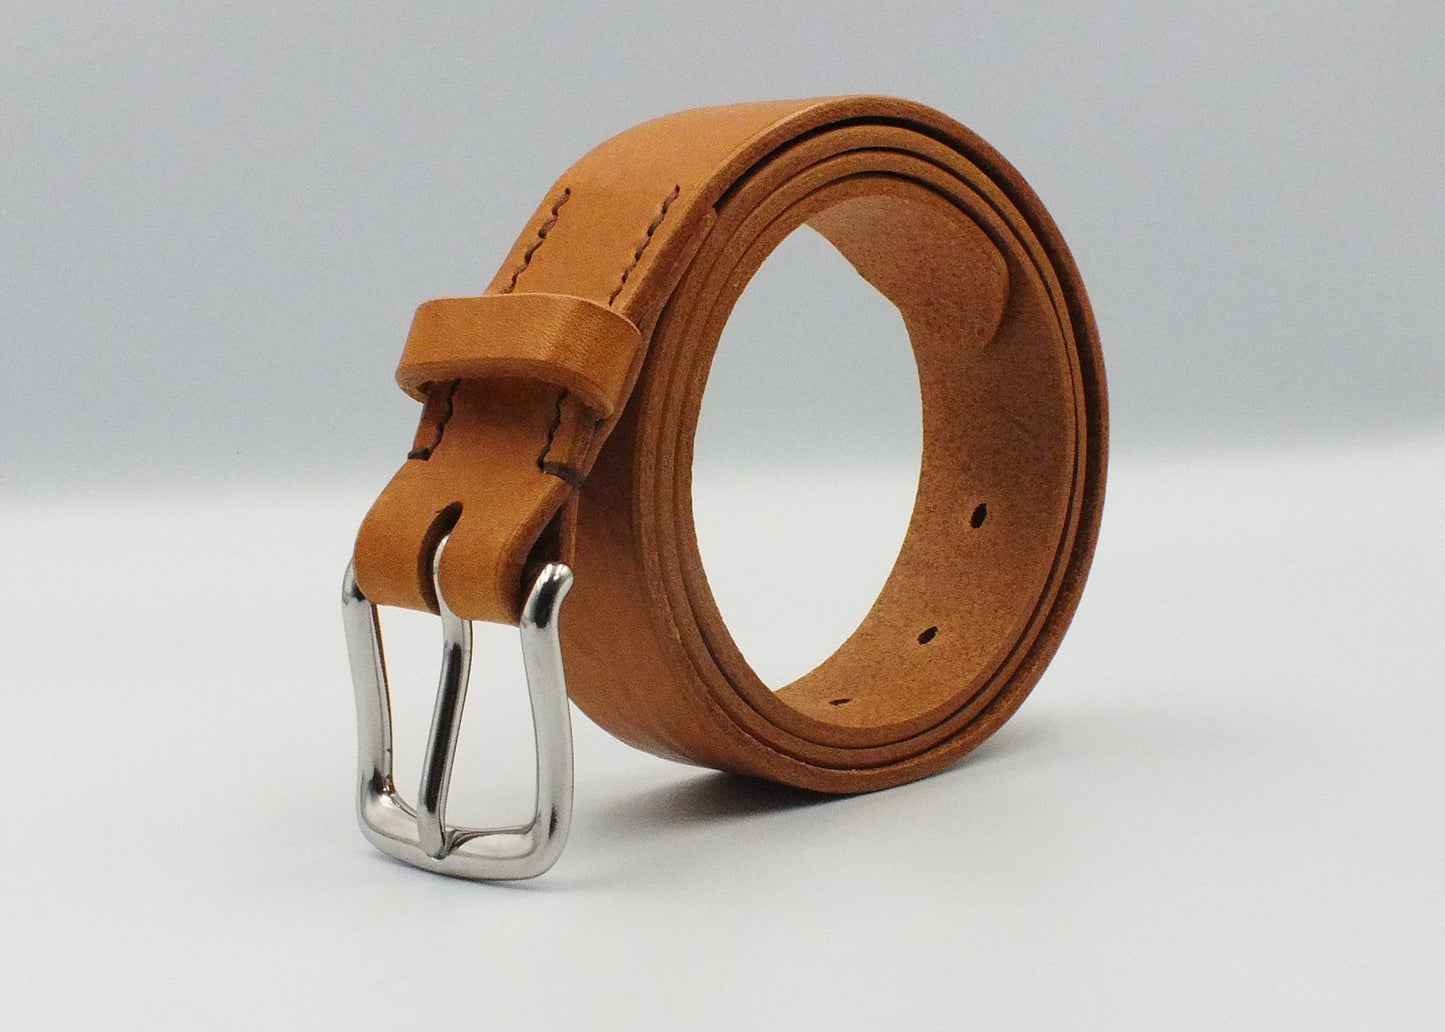 SALE - Tan Leather Belt - 1.25" (32mm wide) - 32" to 36" Waist